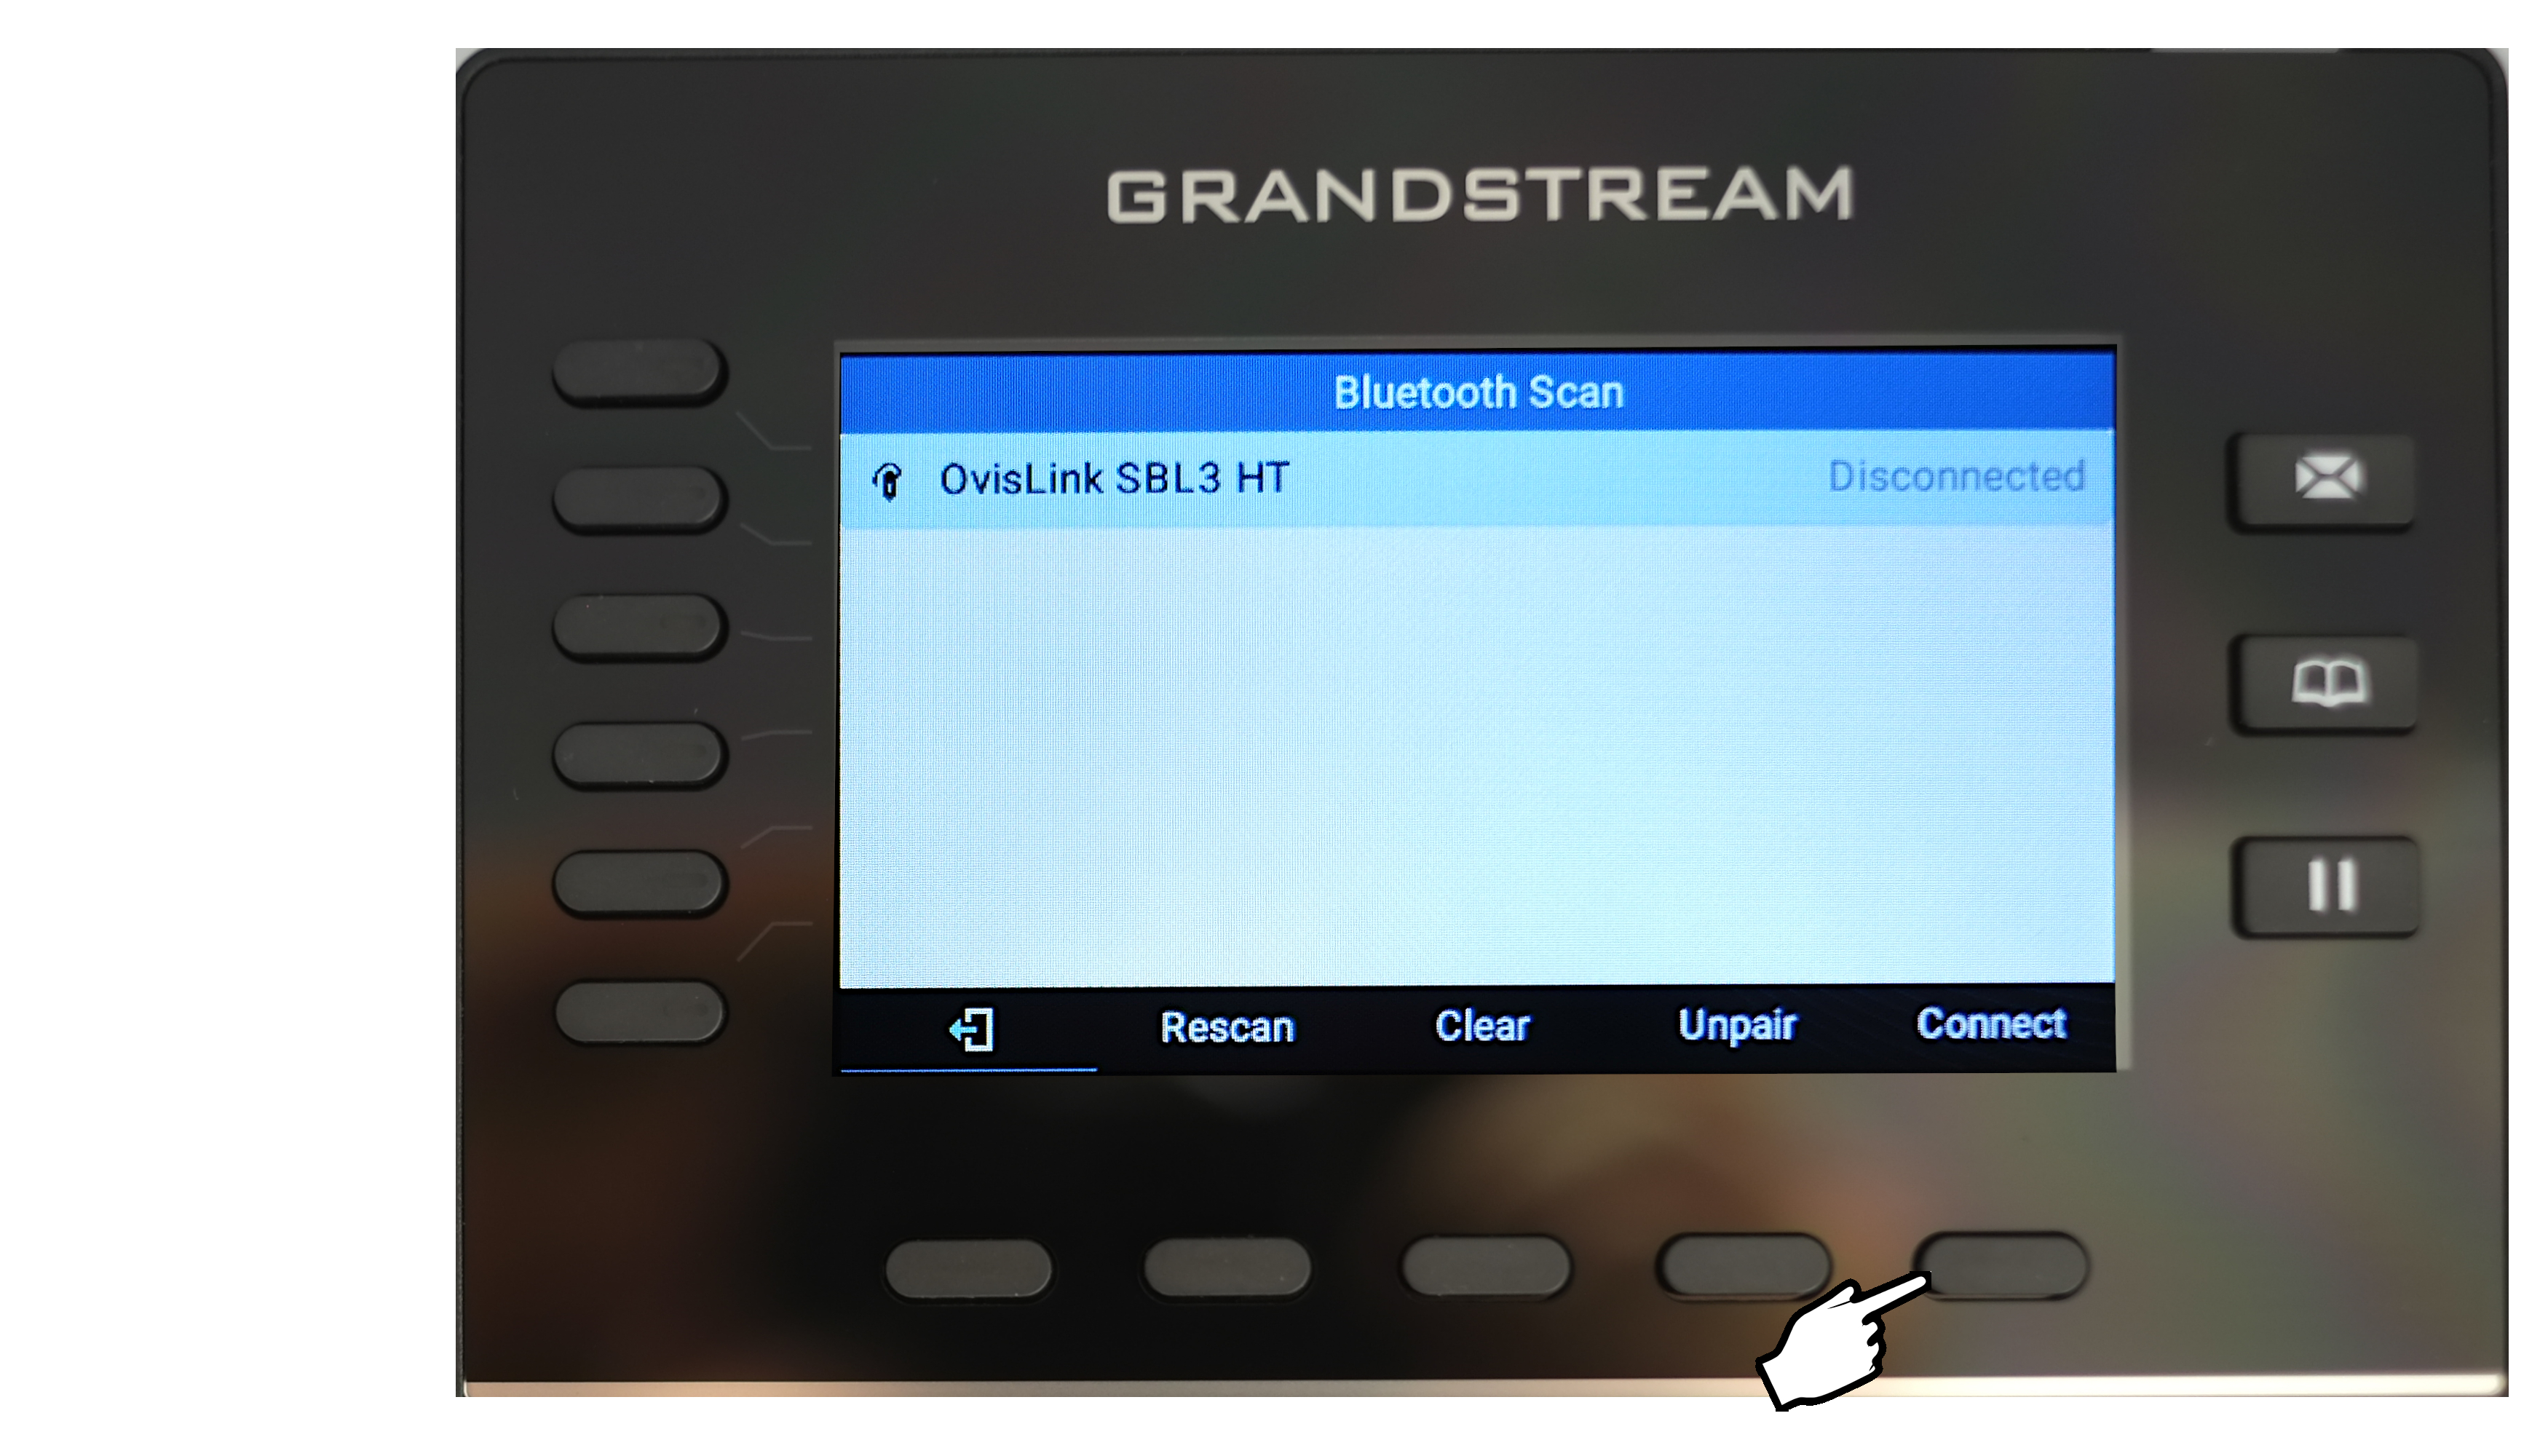 Grandstream phone found OvisLink Bluetooth headset